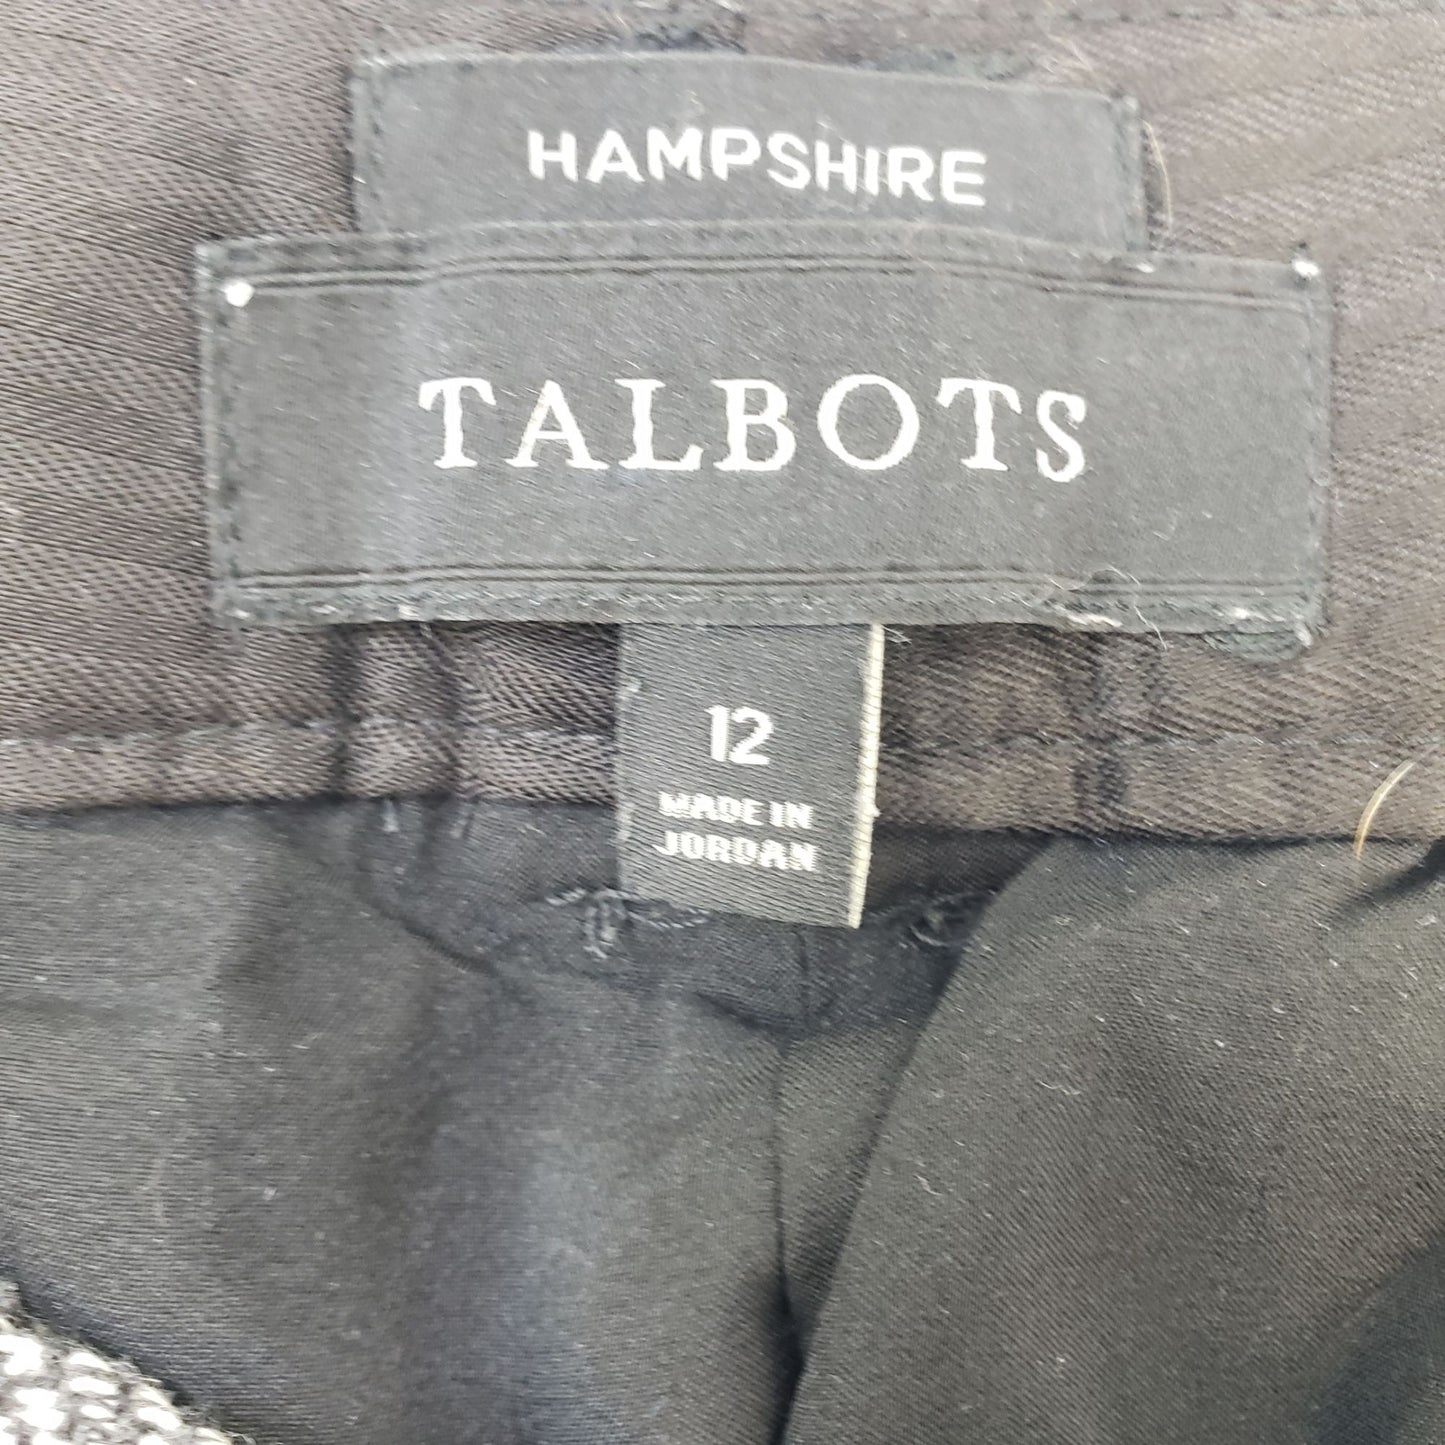 Talbots Hampshire Wool Blend Herringbone Pattern Trousers Size 12